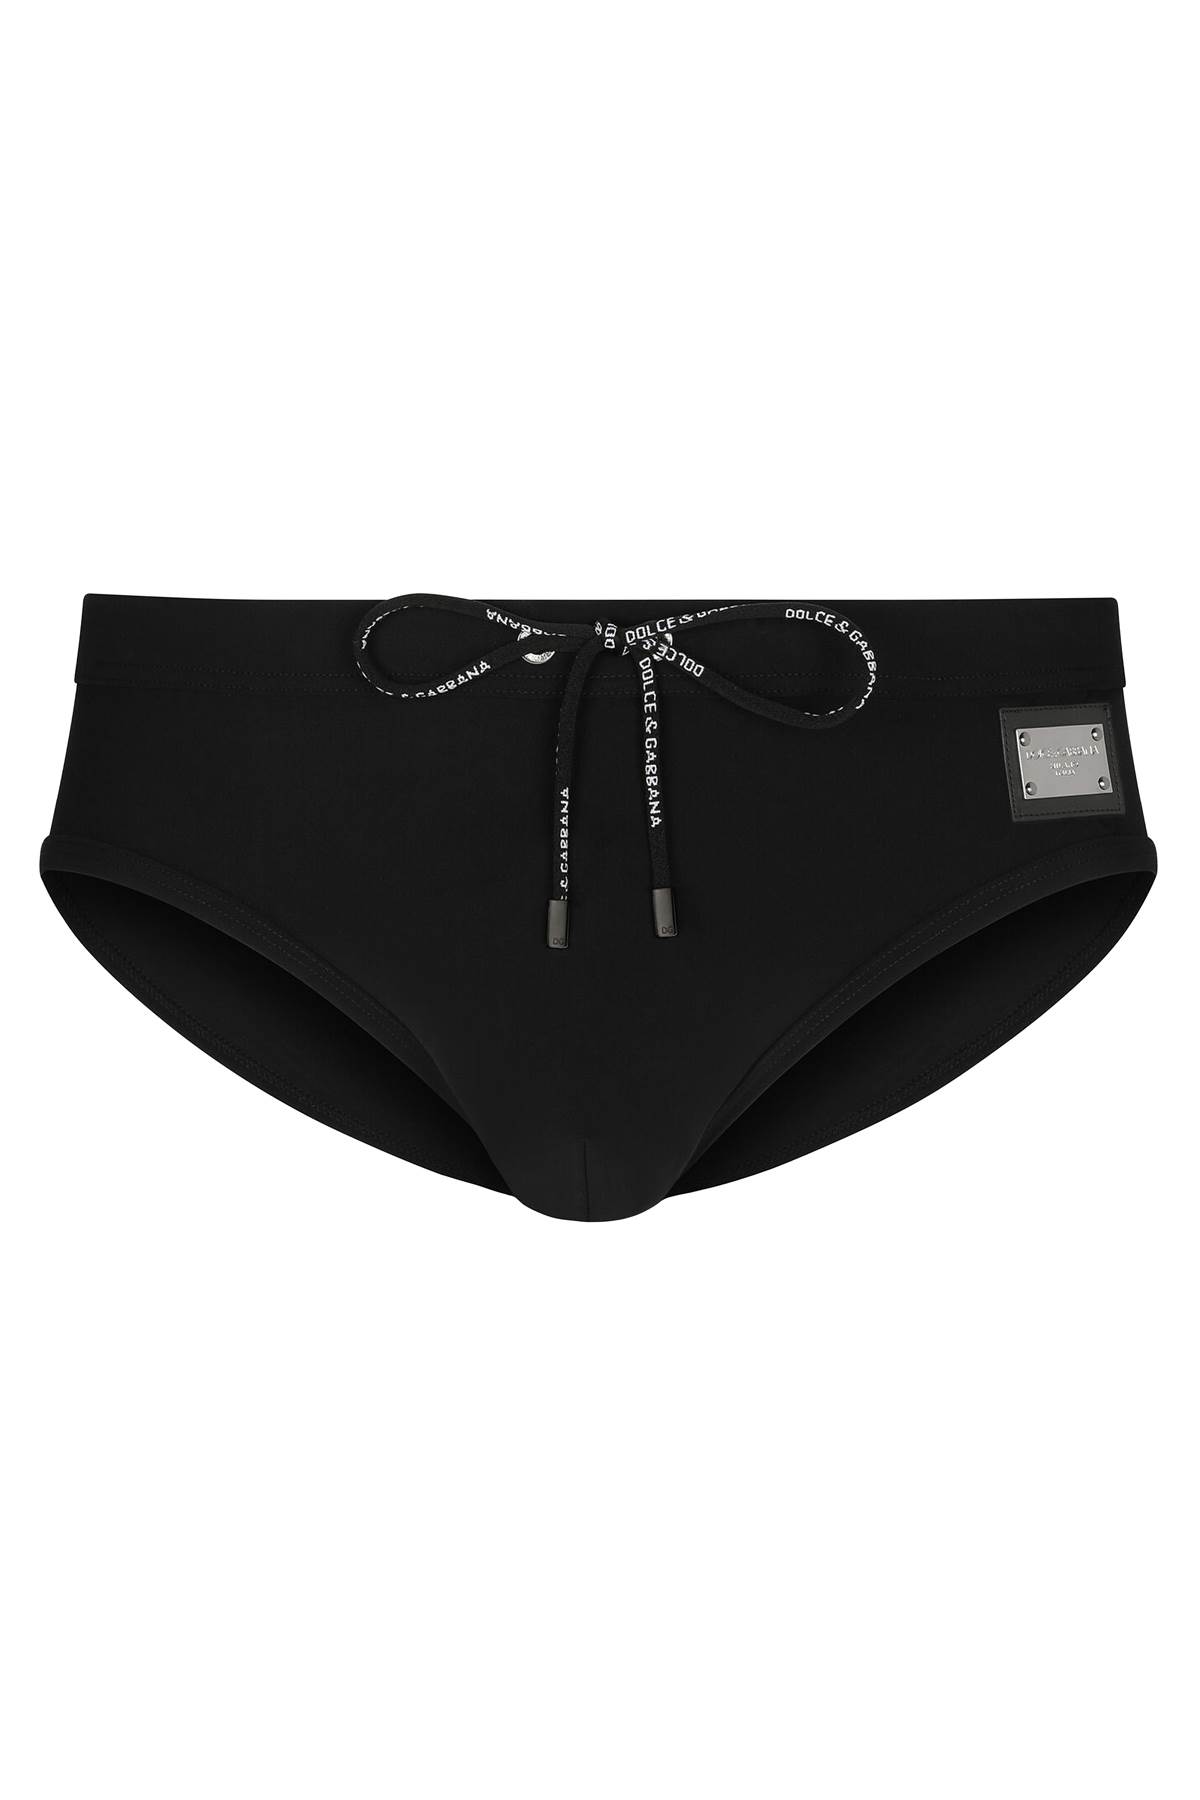 Dolce & Gabbana Swim Briefs With Plate In Nero (black)